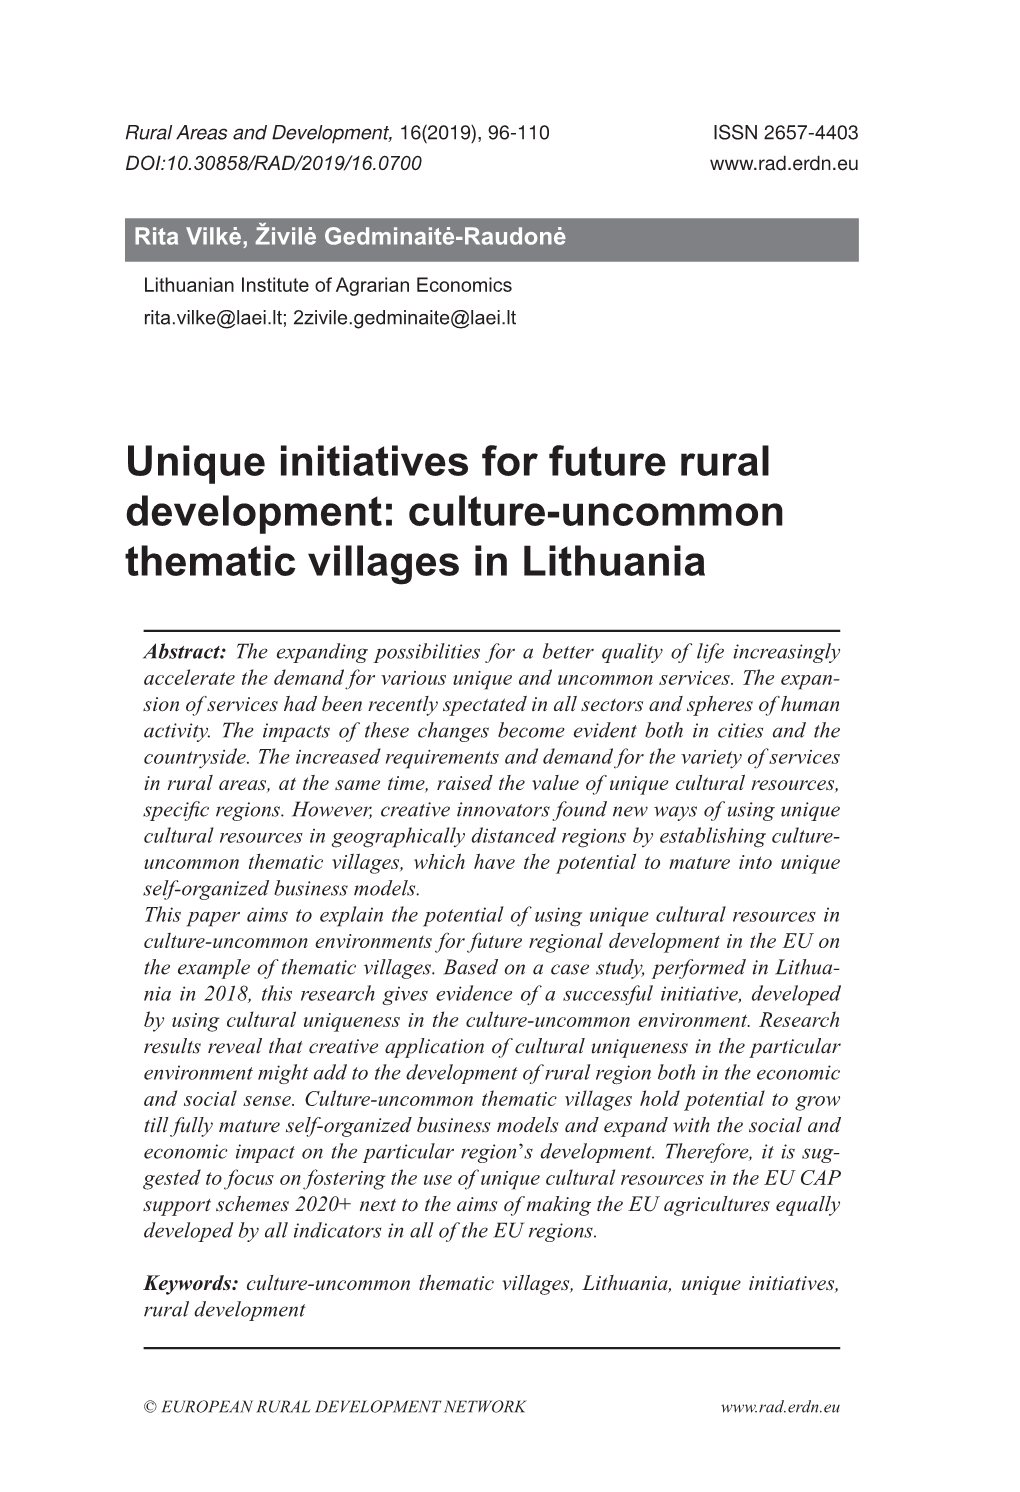 Unique Initiatives for Future Rural Development: Culture-Uncommon Thematic Villages in Lithuania